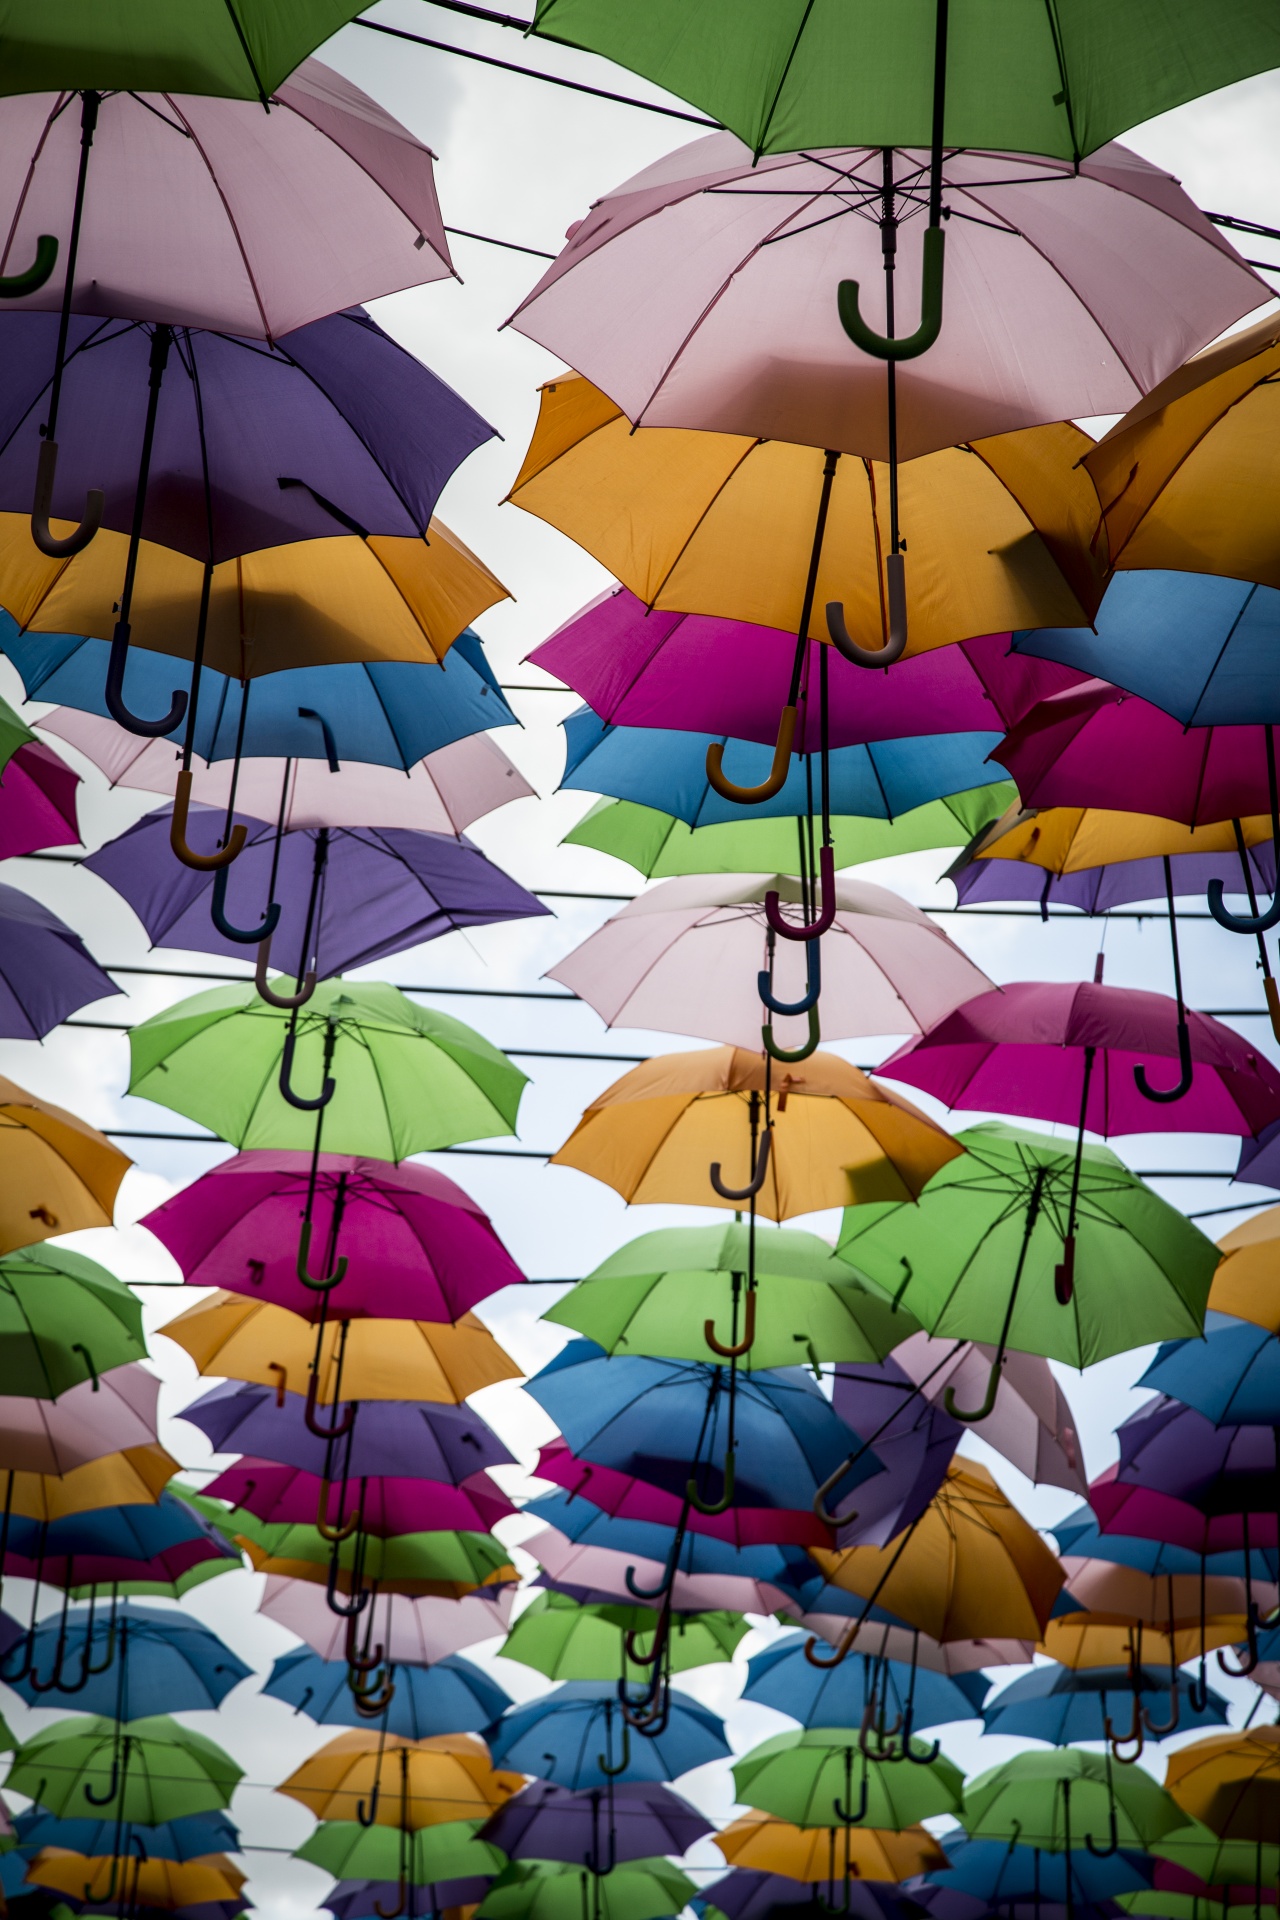 Umbrella Street In France